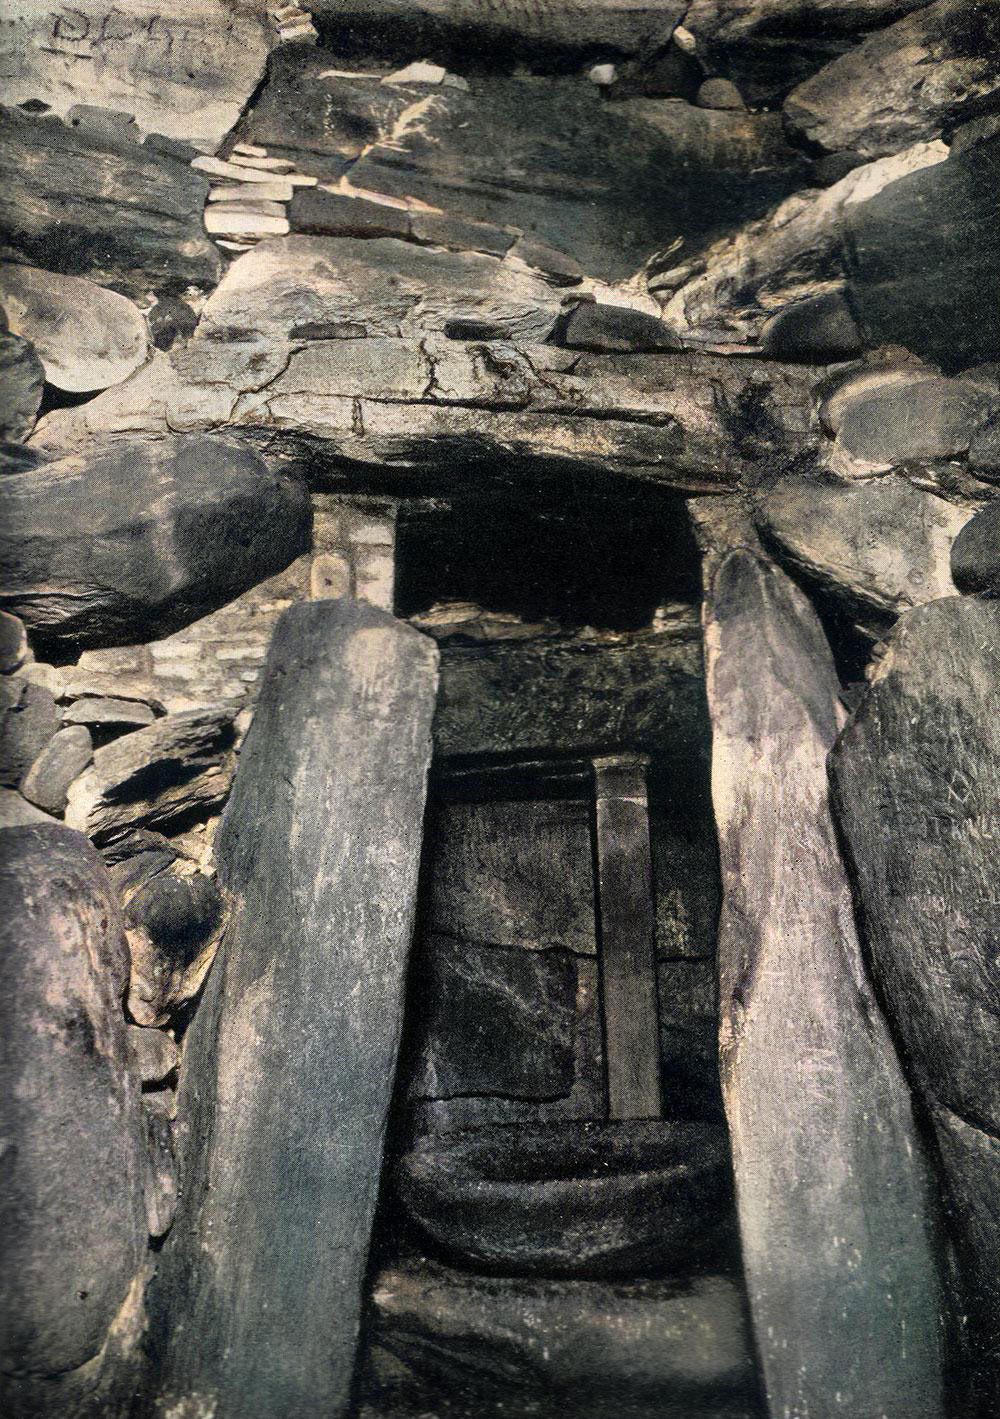 The chamber at Newgrange.